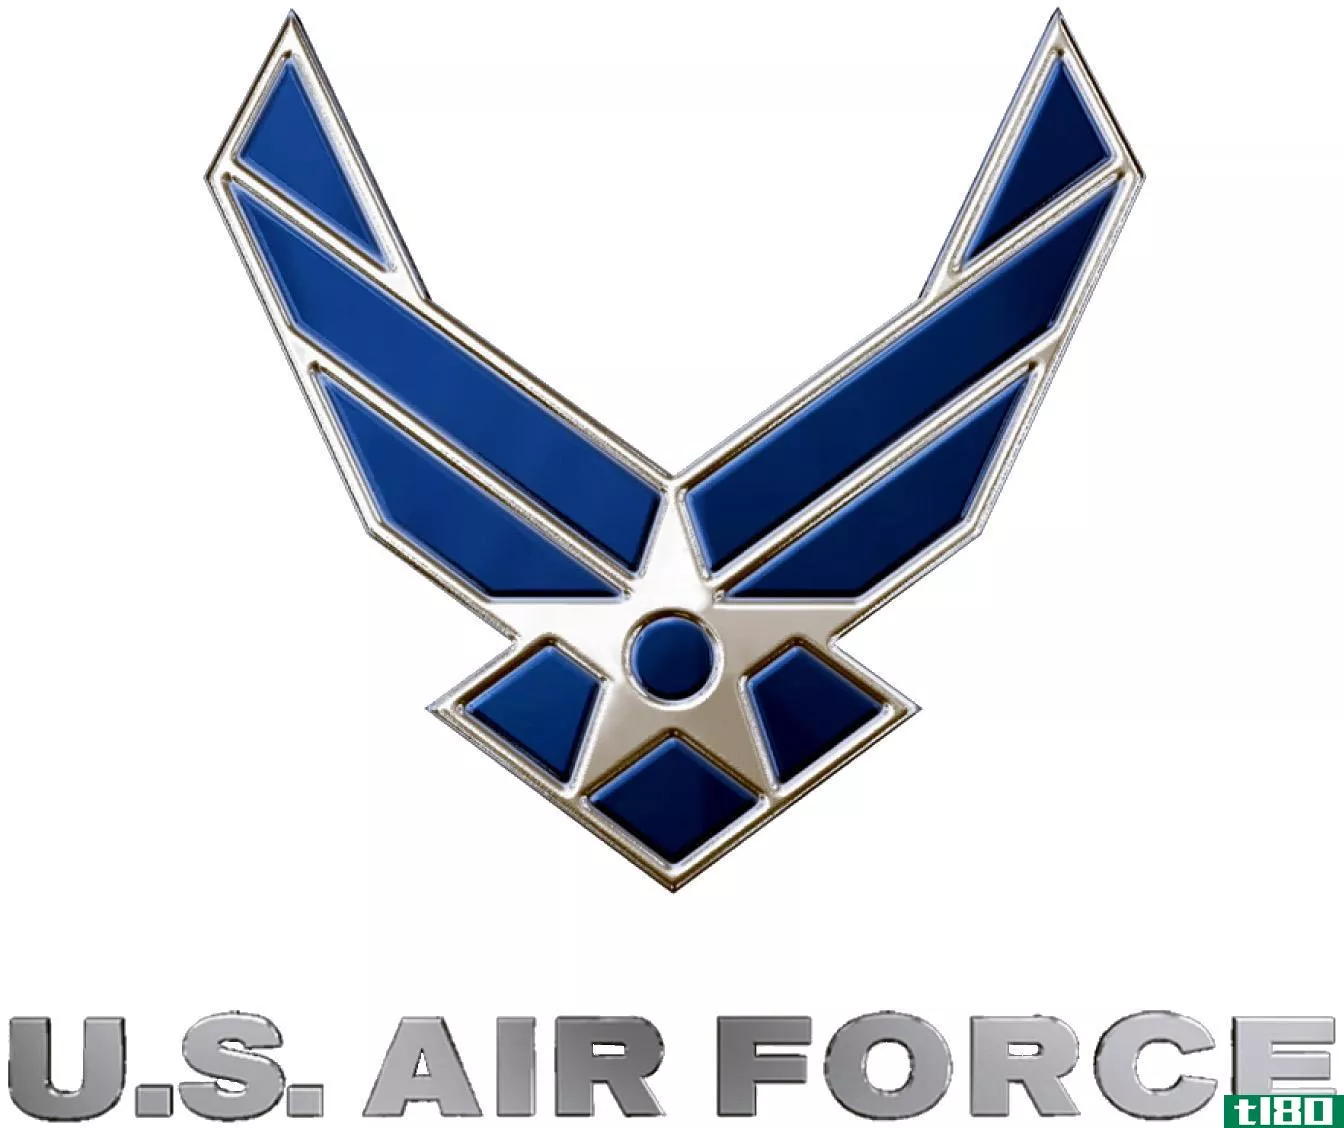 空军(air force)和军队(army)的区别